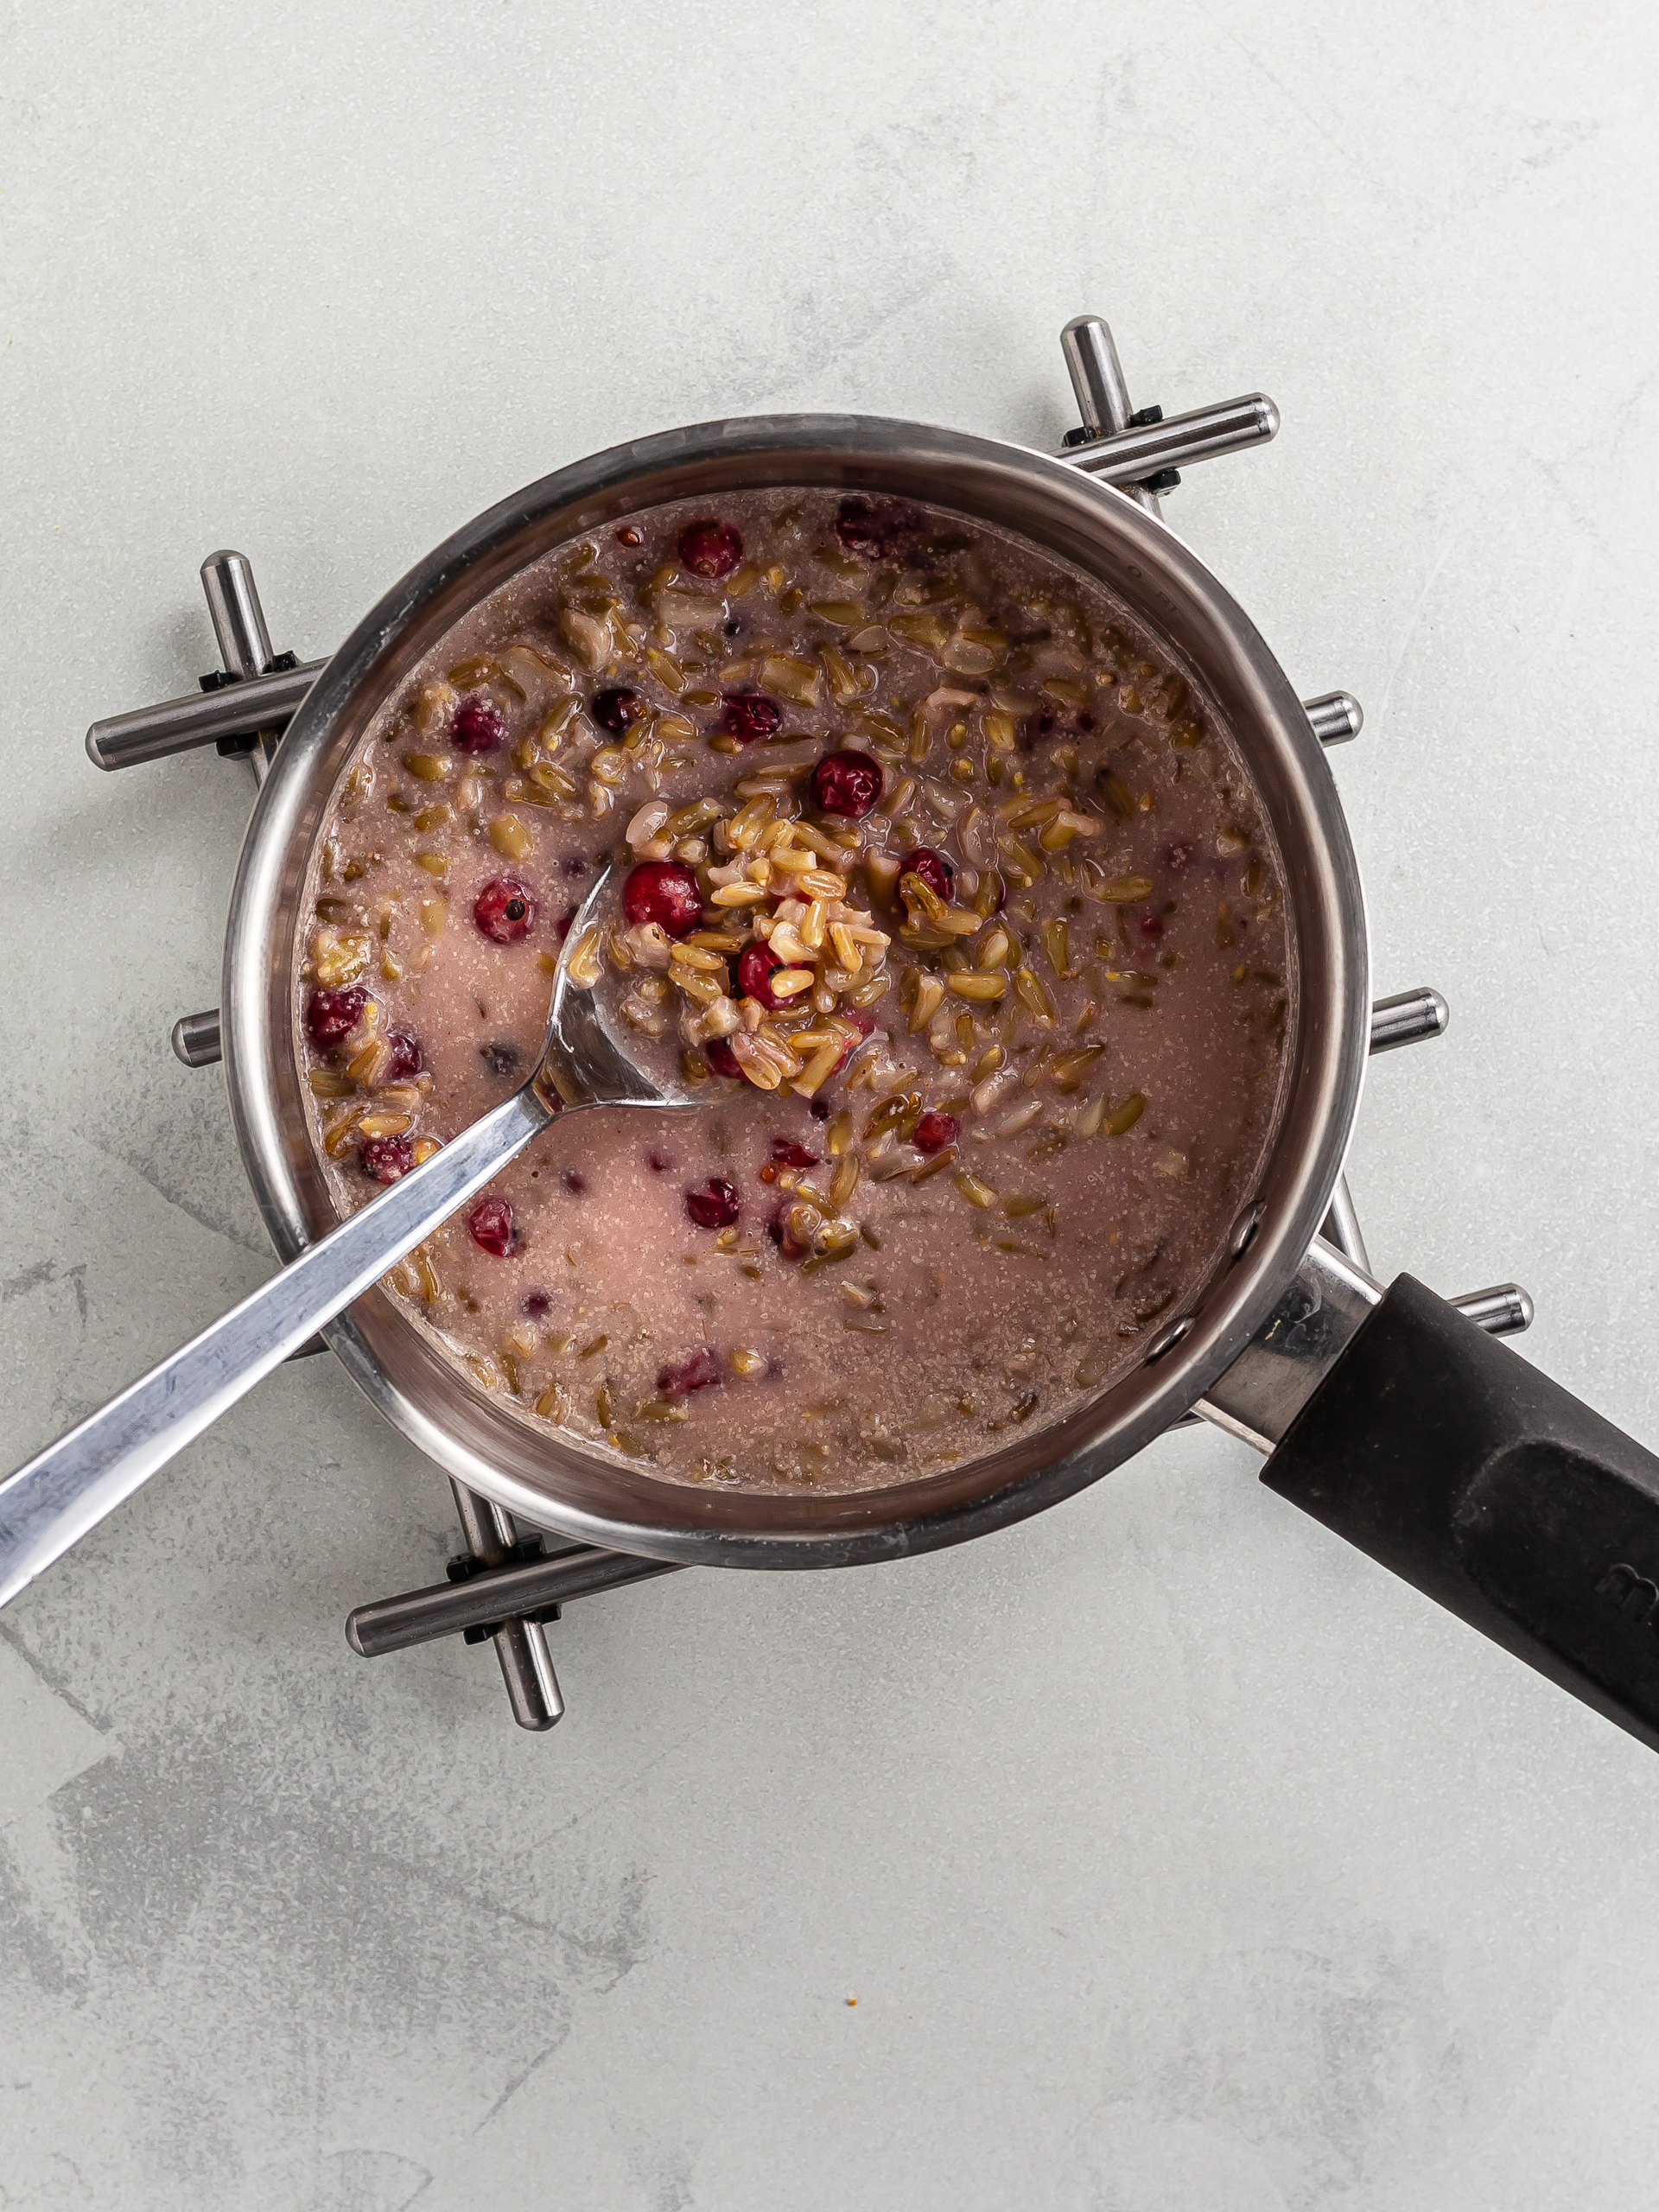 oat groats porridge with red currant berries